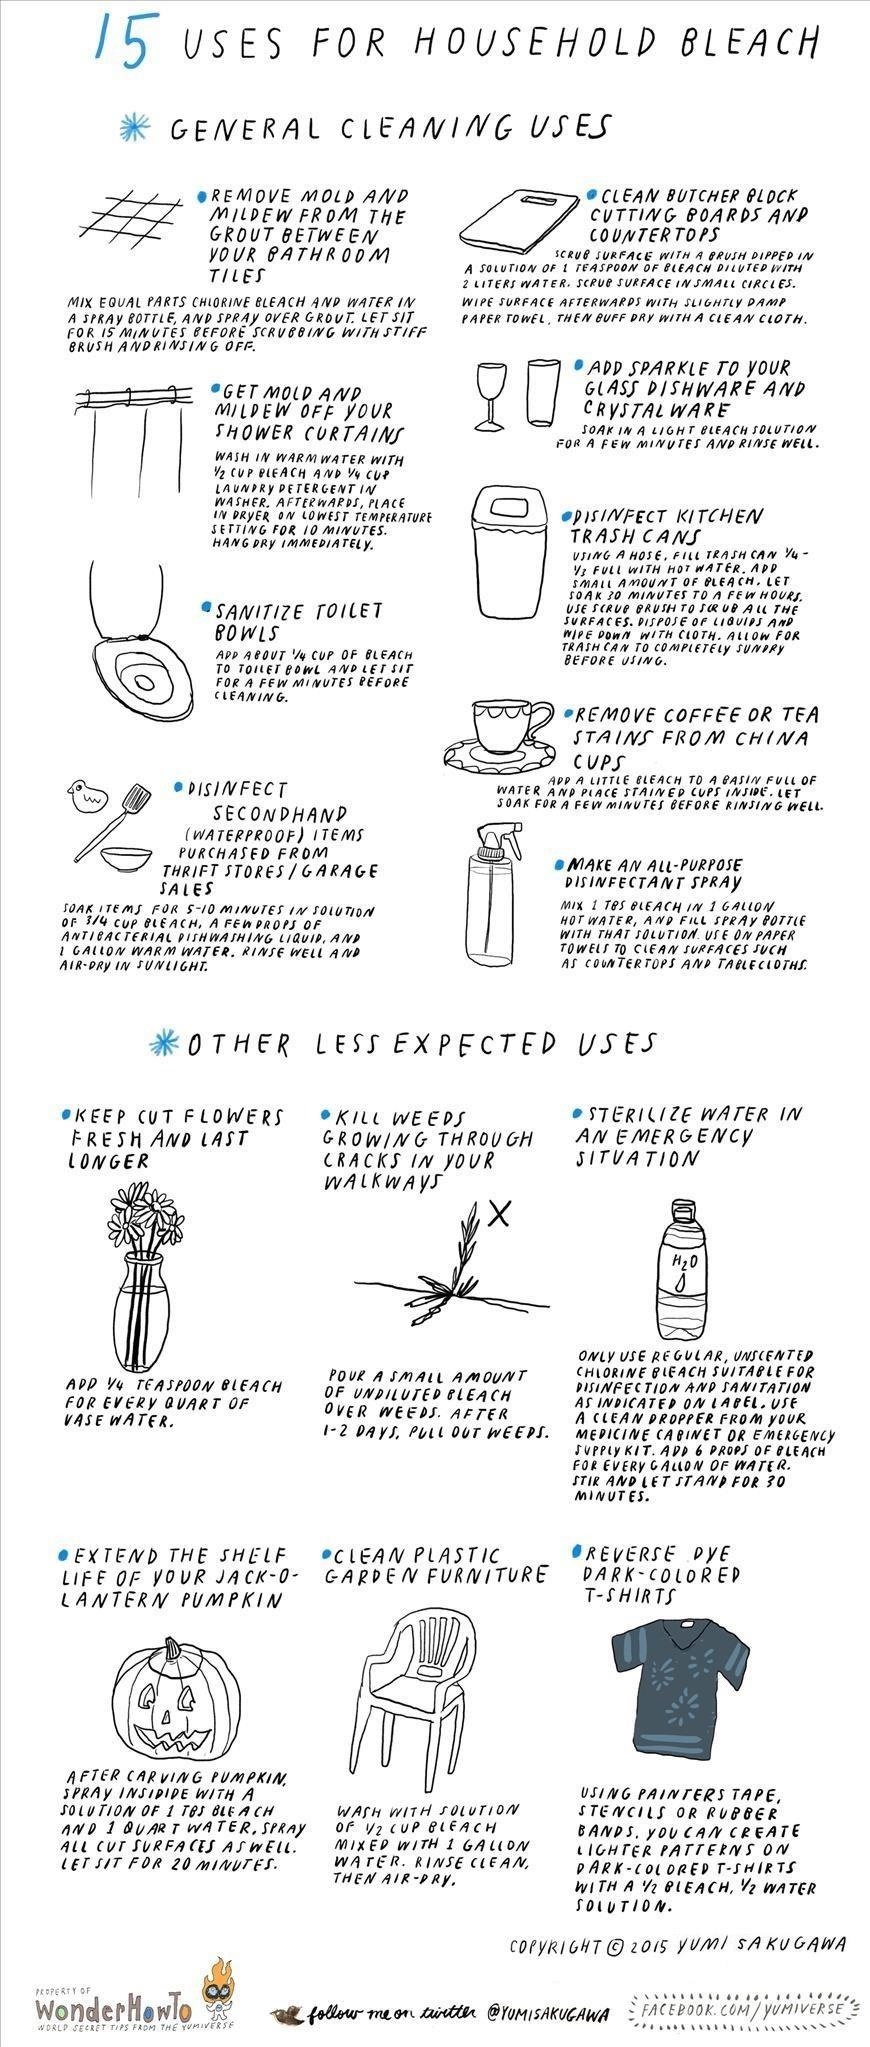 15 Uses for Household Bleach